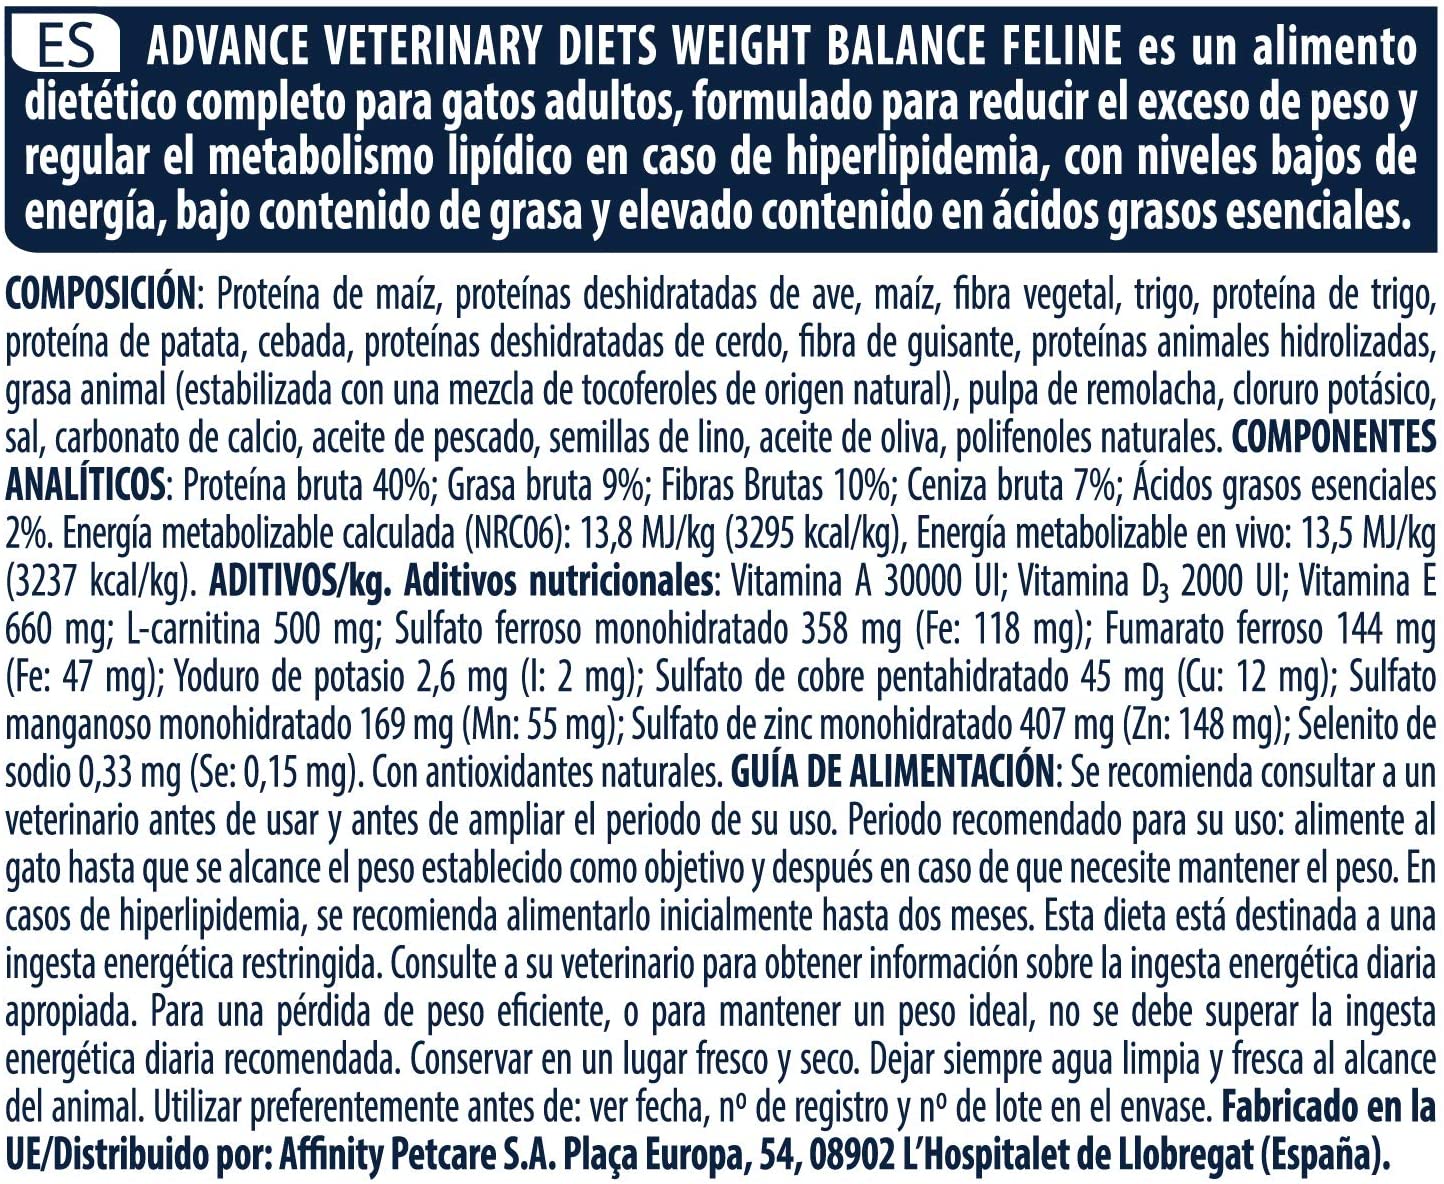  Advance Veterinary Diets Weight Balance - Pienso para Gatos con Tendencia a la obesidad - 8 kg 